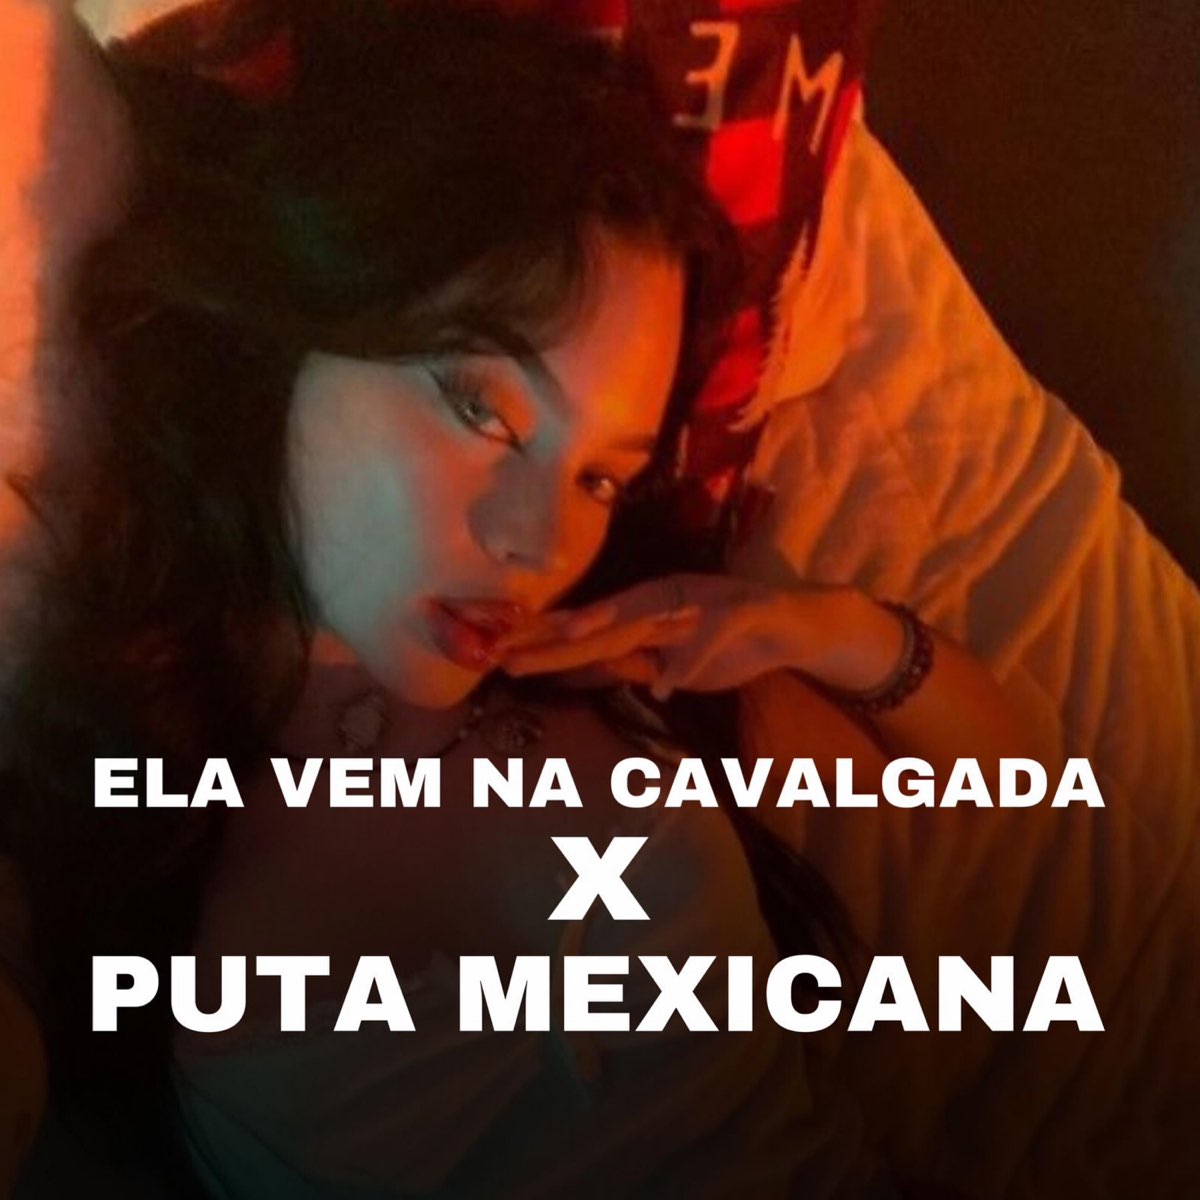 ‎ela Vem Na Cavalgada X Puta Rara Puta Mexicana Funk Rj Single By 0829